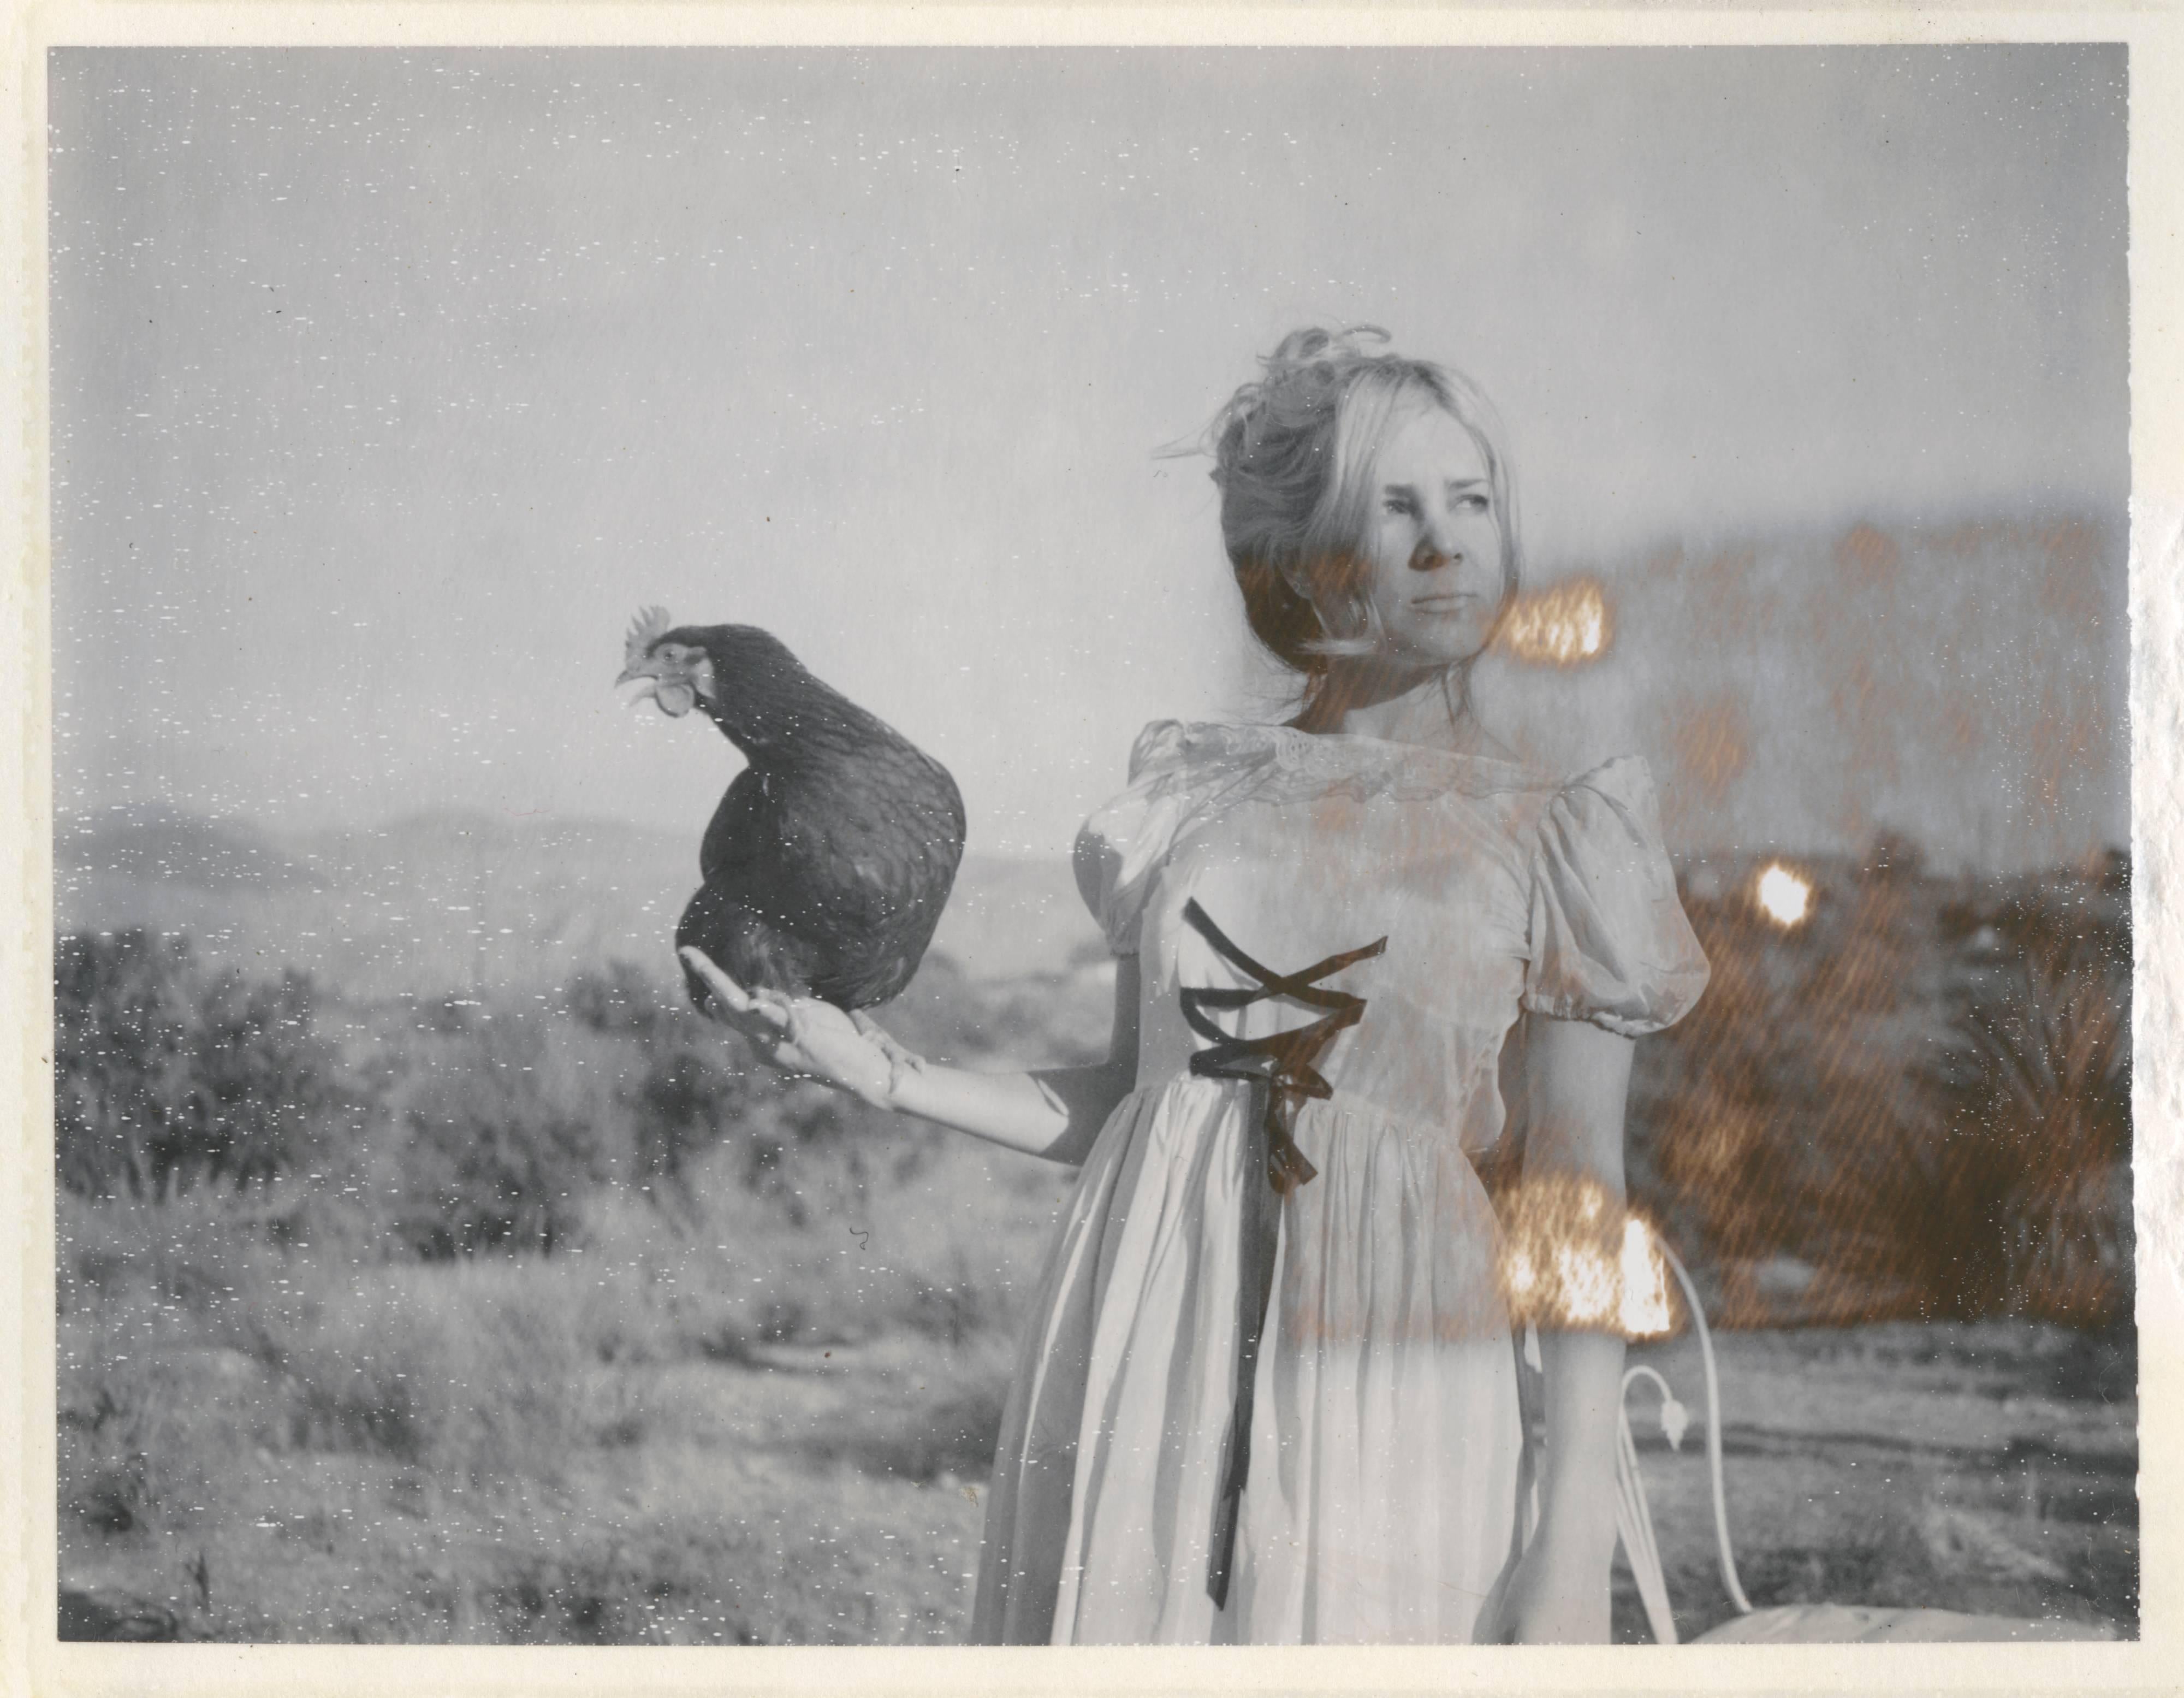 Stefanie Schneider Portrait Photograph - Victorian Falcon (Chicks and Chicks and sometimes Cocks) 